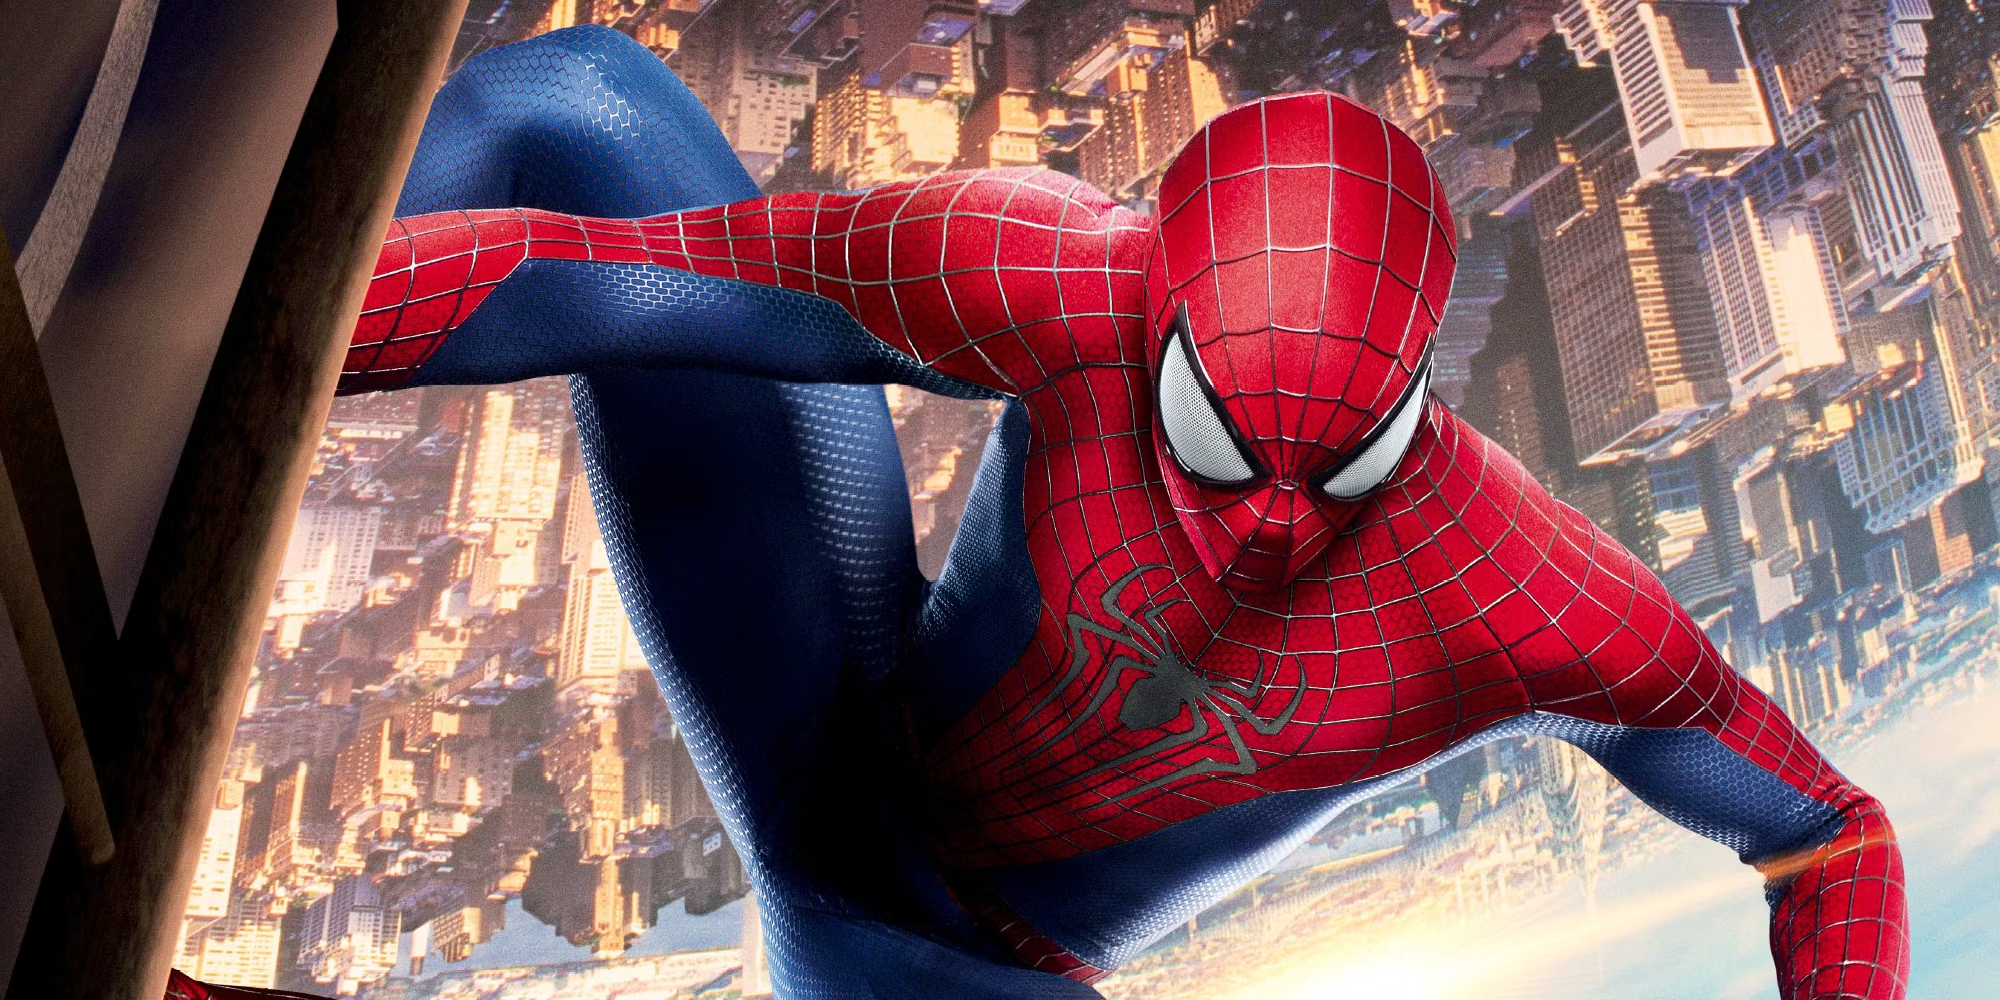 Andrew Garfield's Spider-Man suit in The Amazing Spider-Man 2.